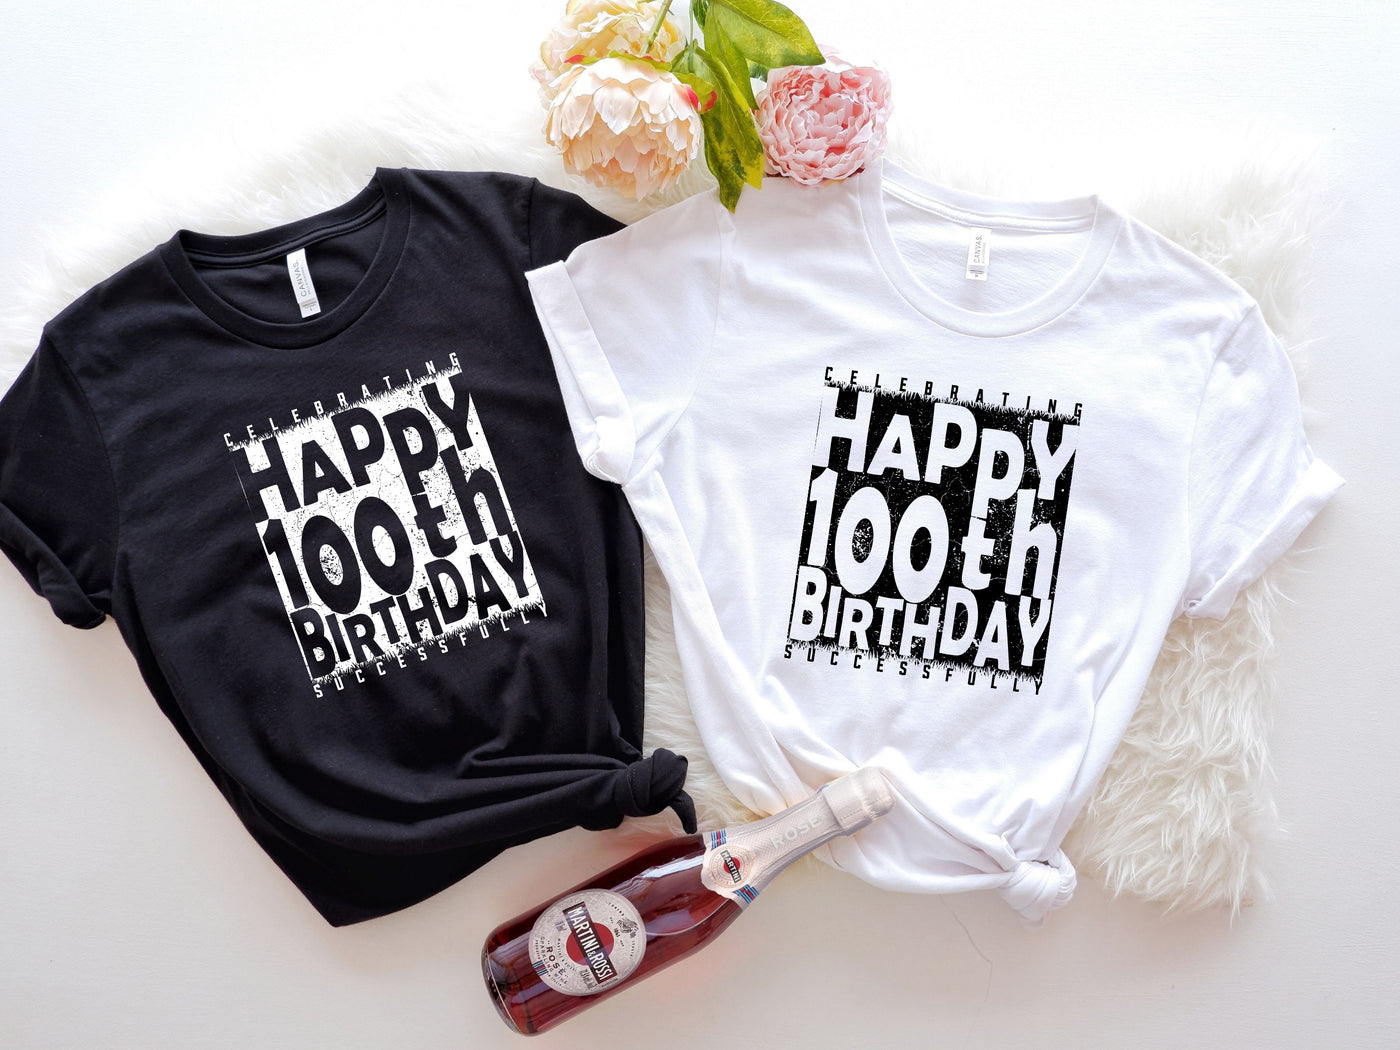 Celebrating Happy 100th